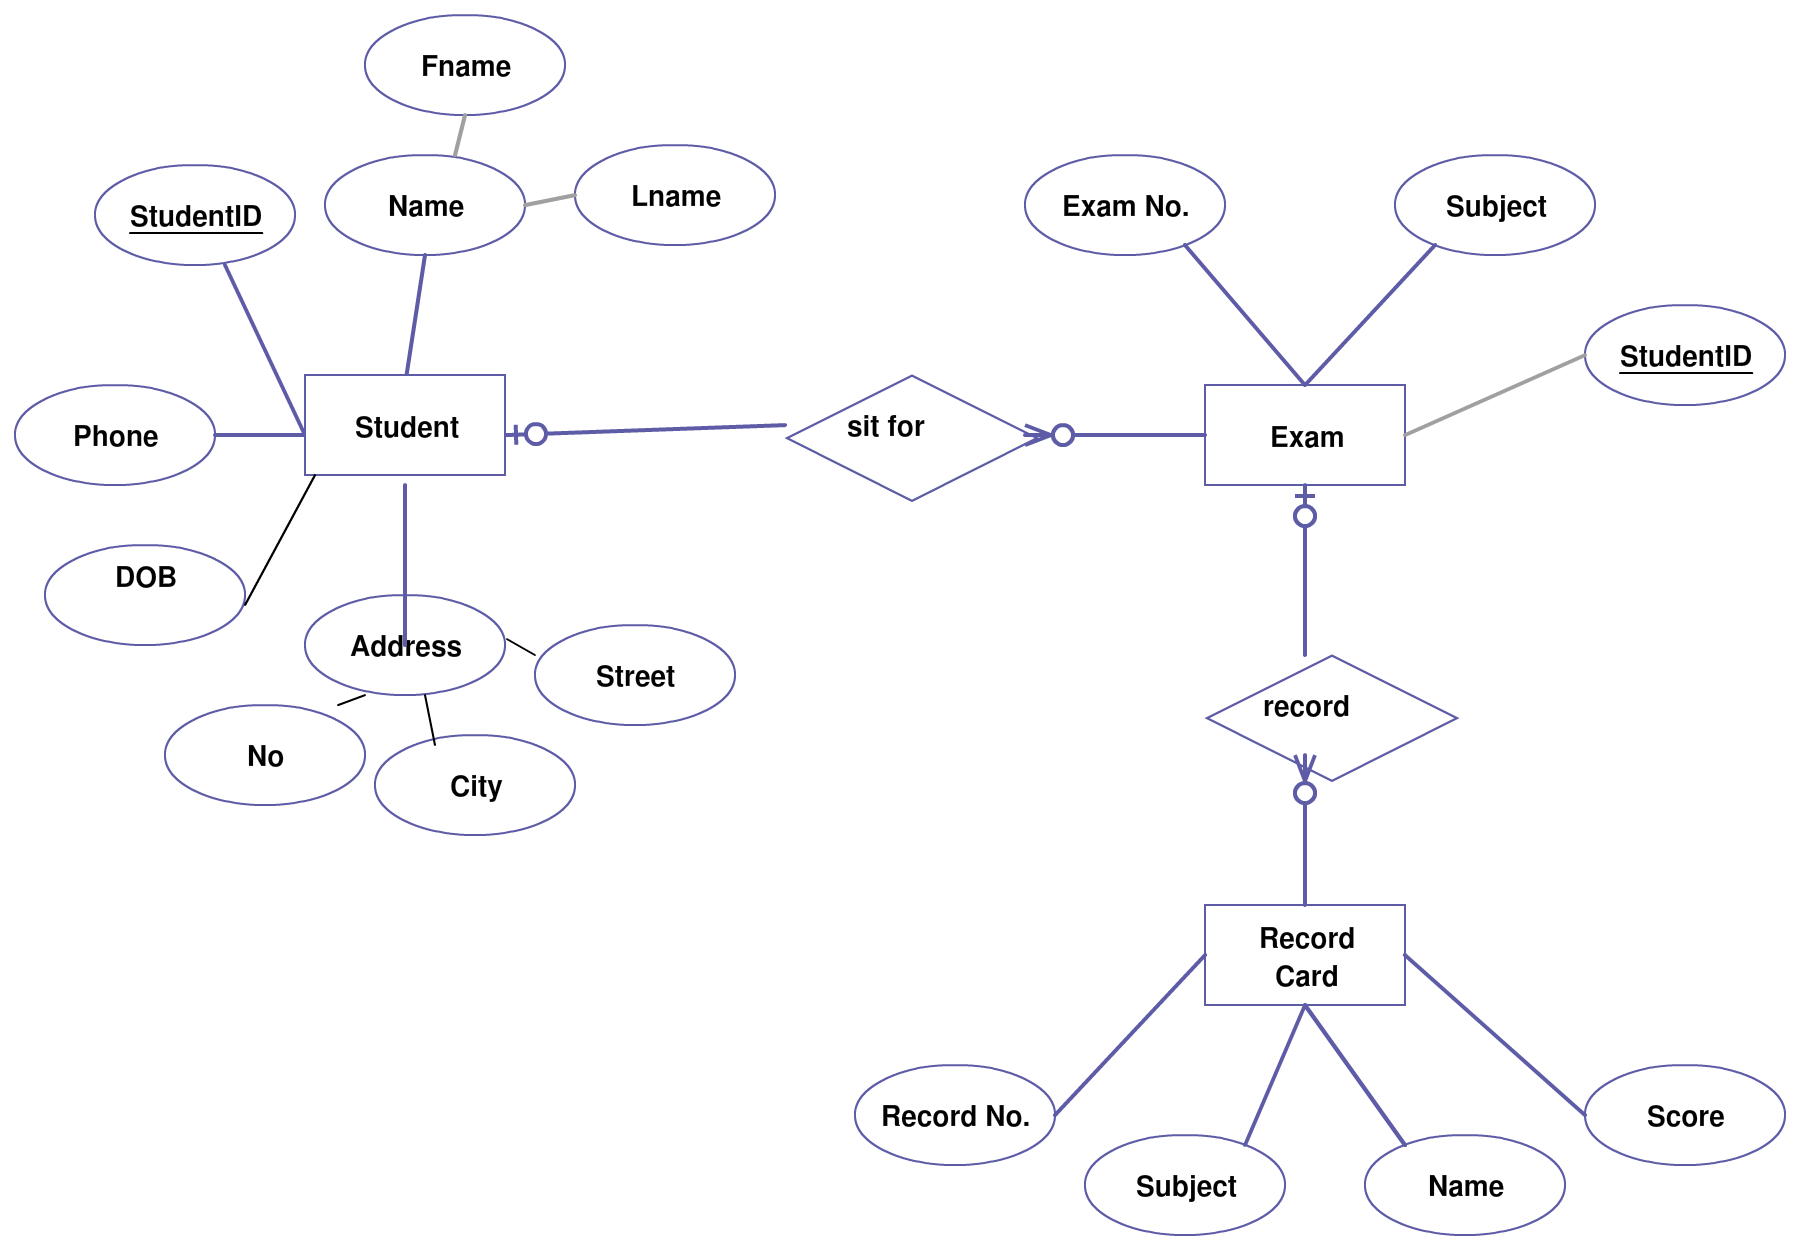 Entity Relationship Diagram (Er Diagram) Of Student regarding Er Diagram For Job Portal Project